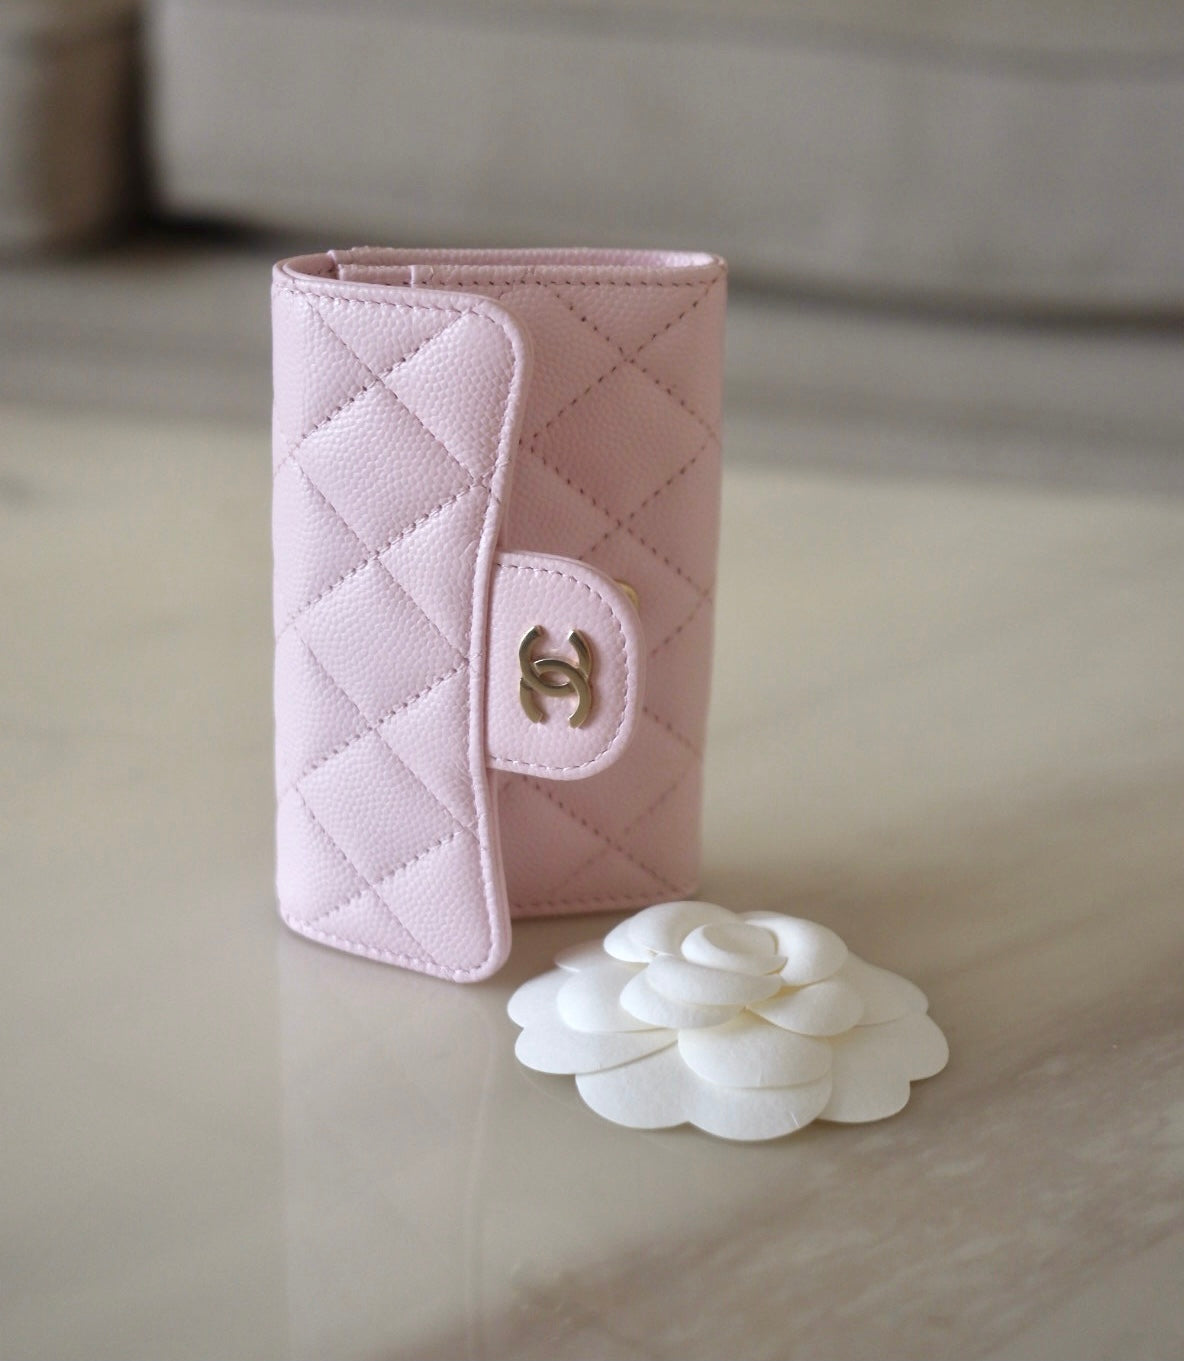 Chanel Pink Caviar Snap Card Holder